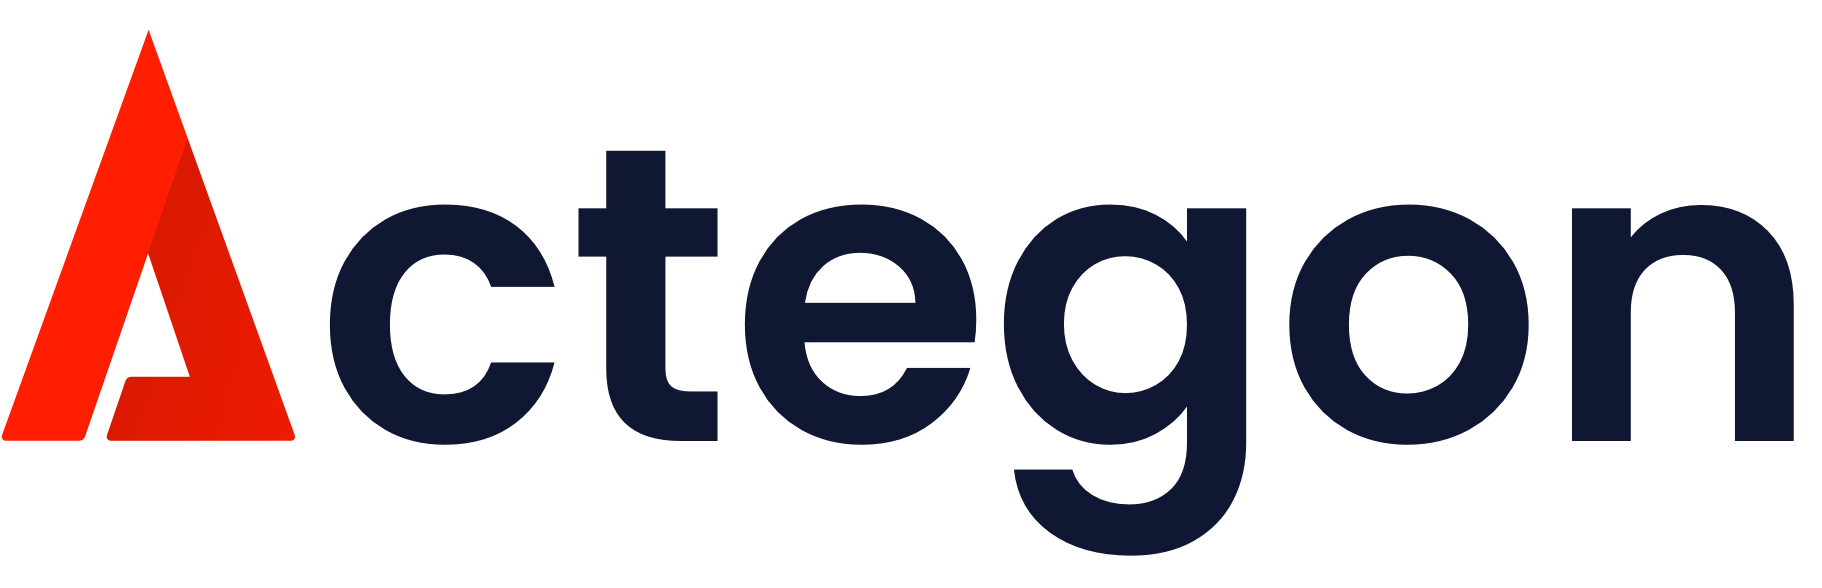 Actegon Logo